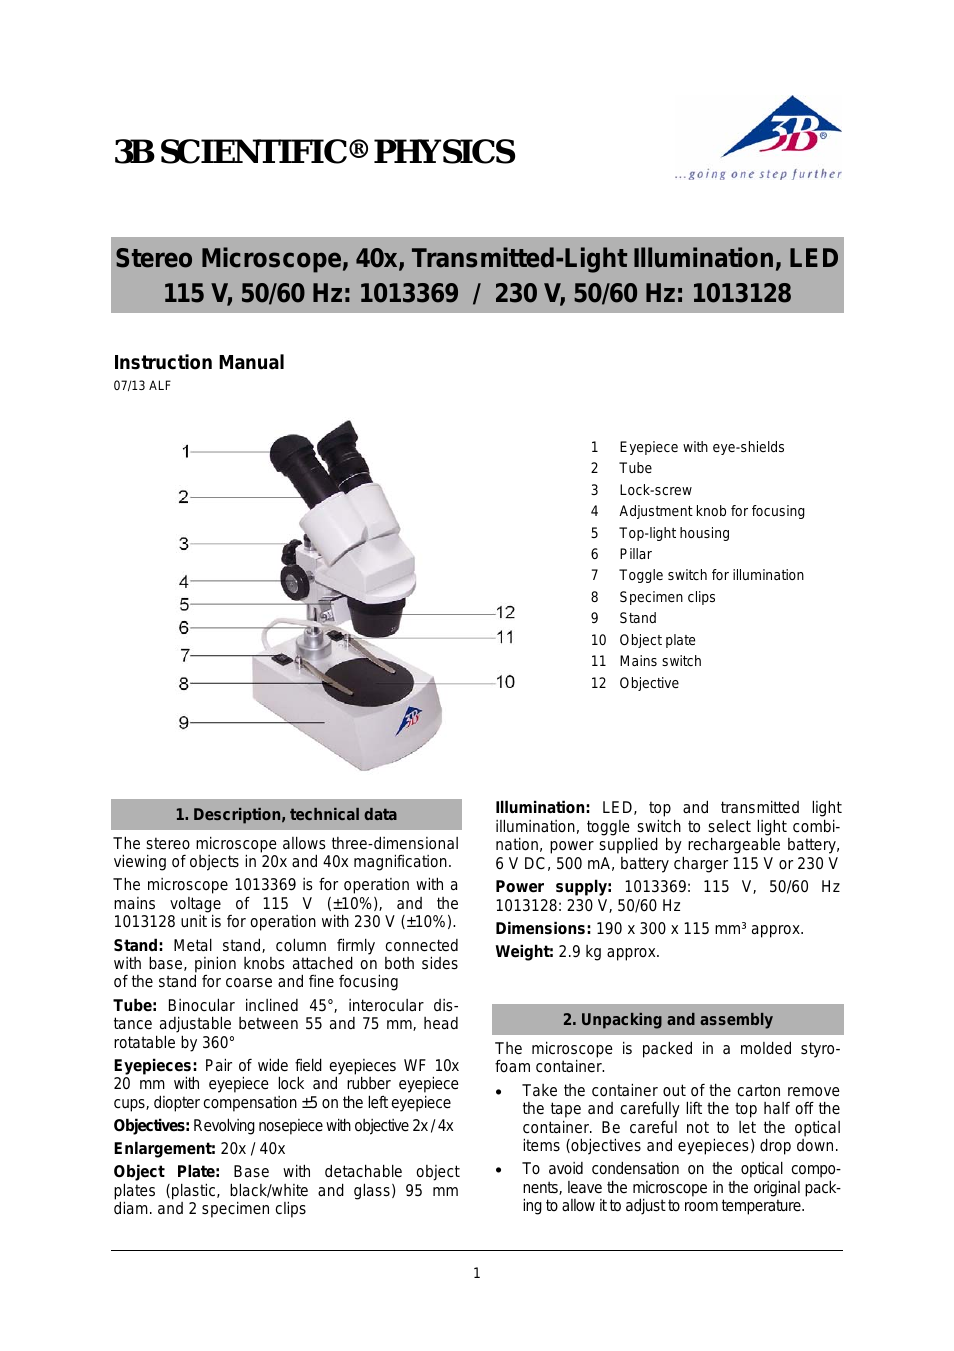 Stereo Microscope, 40x, Transmitted-Light Illumination LED (115 V, 50__60 Hz)